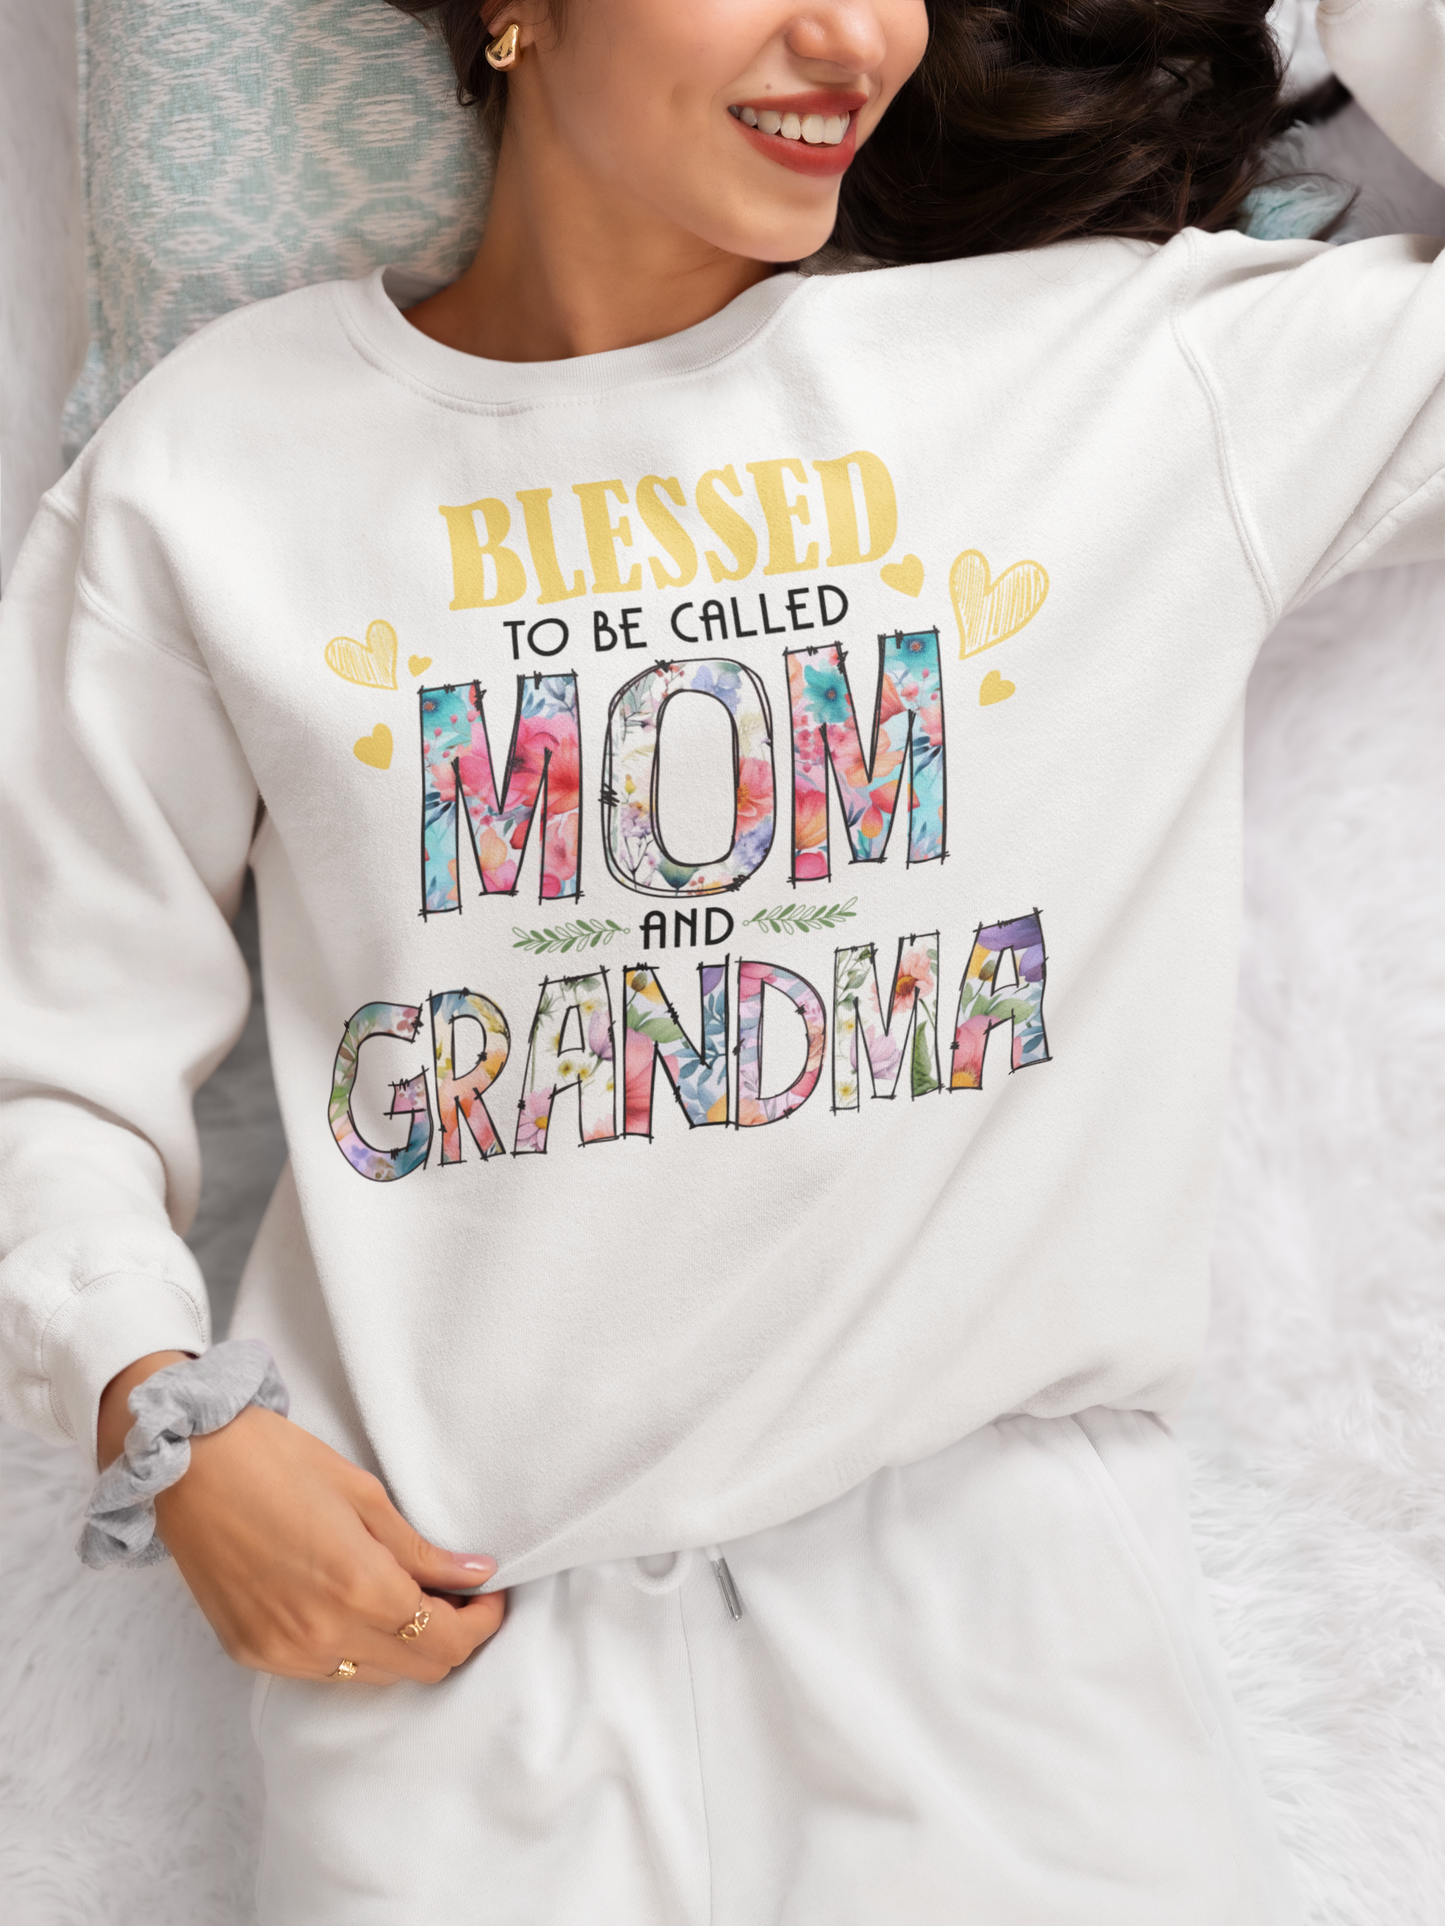 Blessed To Be Called Mom And Grandma Shirt, Grandma Gift, New Grandma T-Shirt, Great Grandma Shirt, Mothers Day Gift,Grandma To Be Shirt,Baby Reveal Shirt,Best Grandma